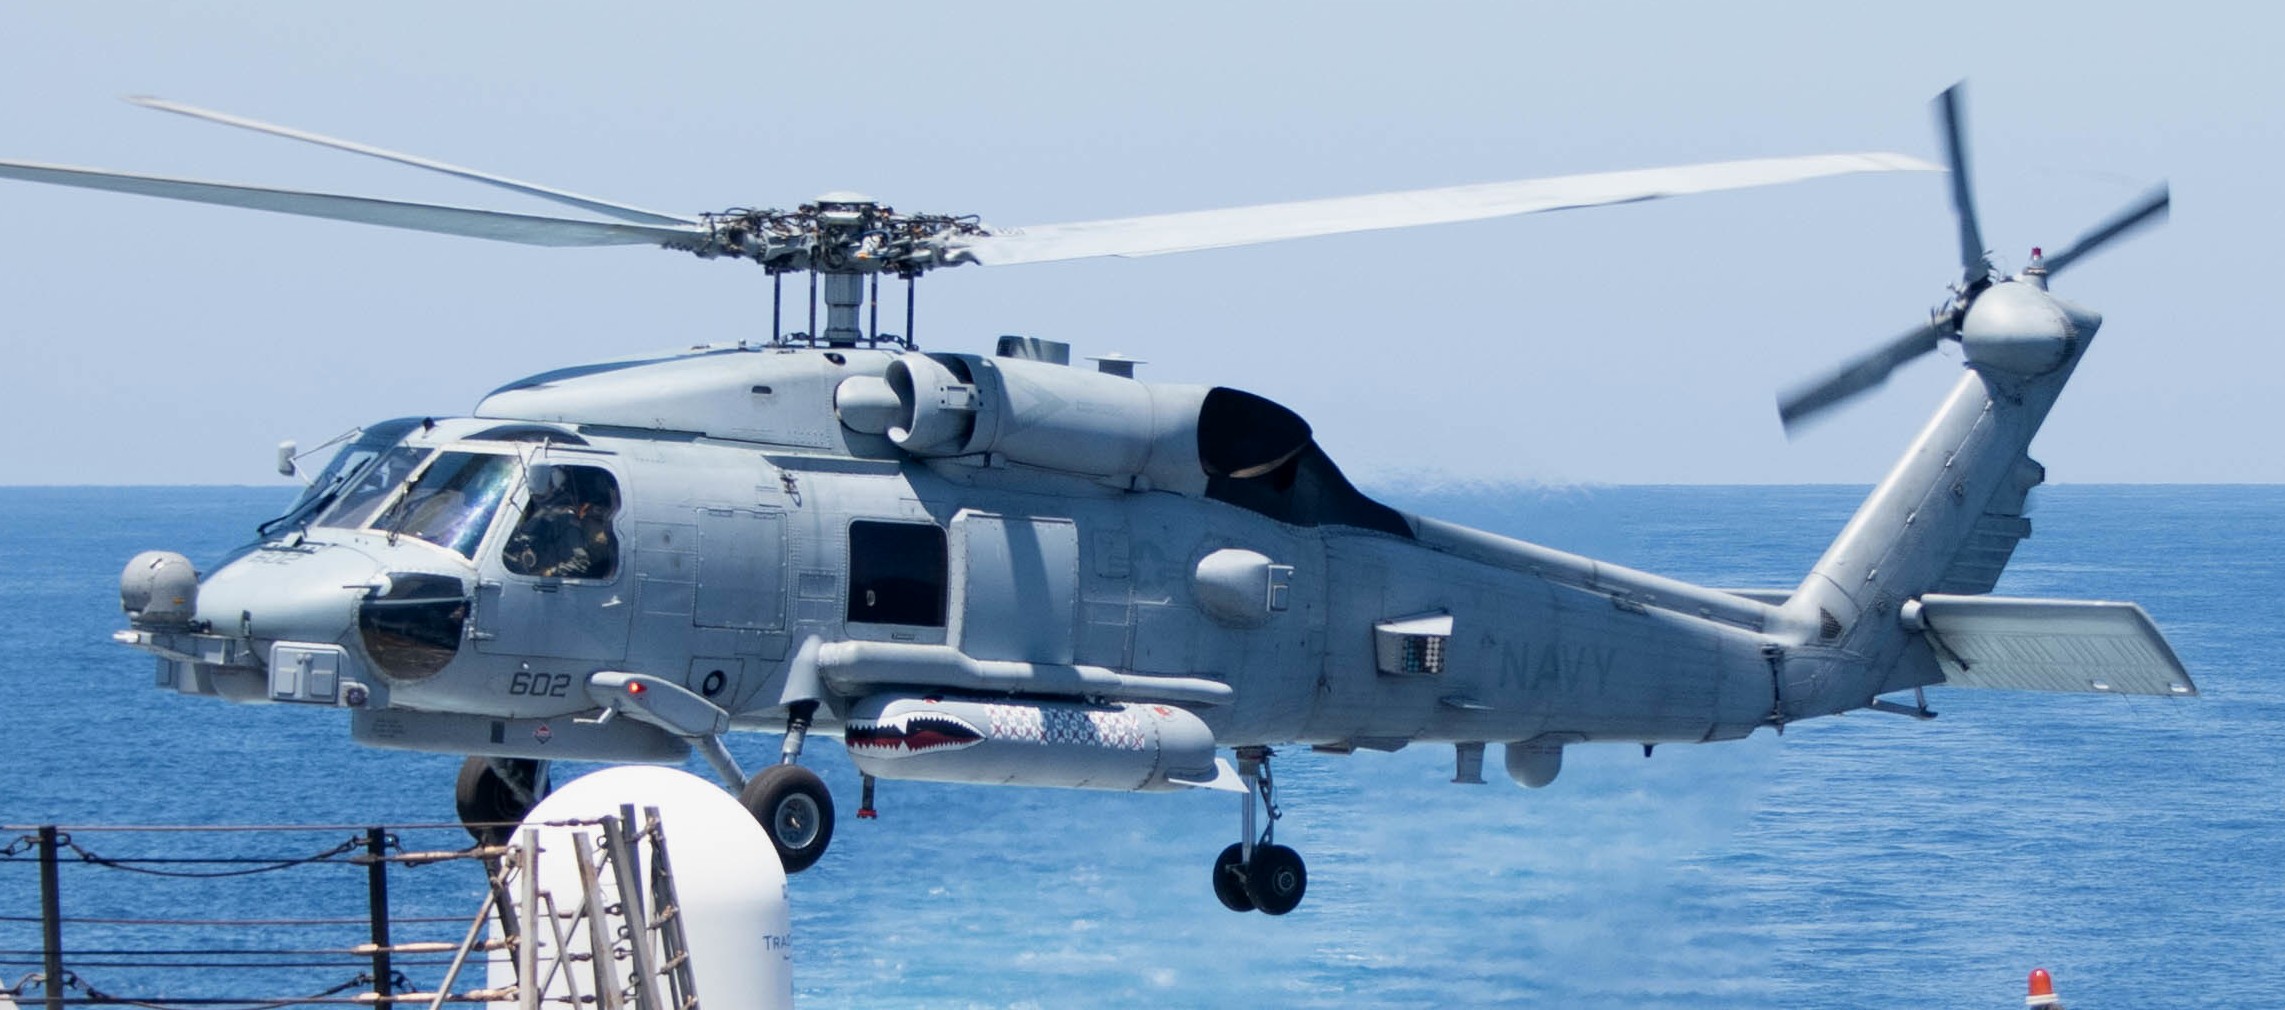 hsm-60 jaguars helicopter maritime strike squadron navy reserve mh-60r seahawk uss forrest sherman ddg-98 10